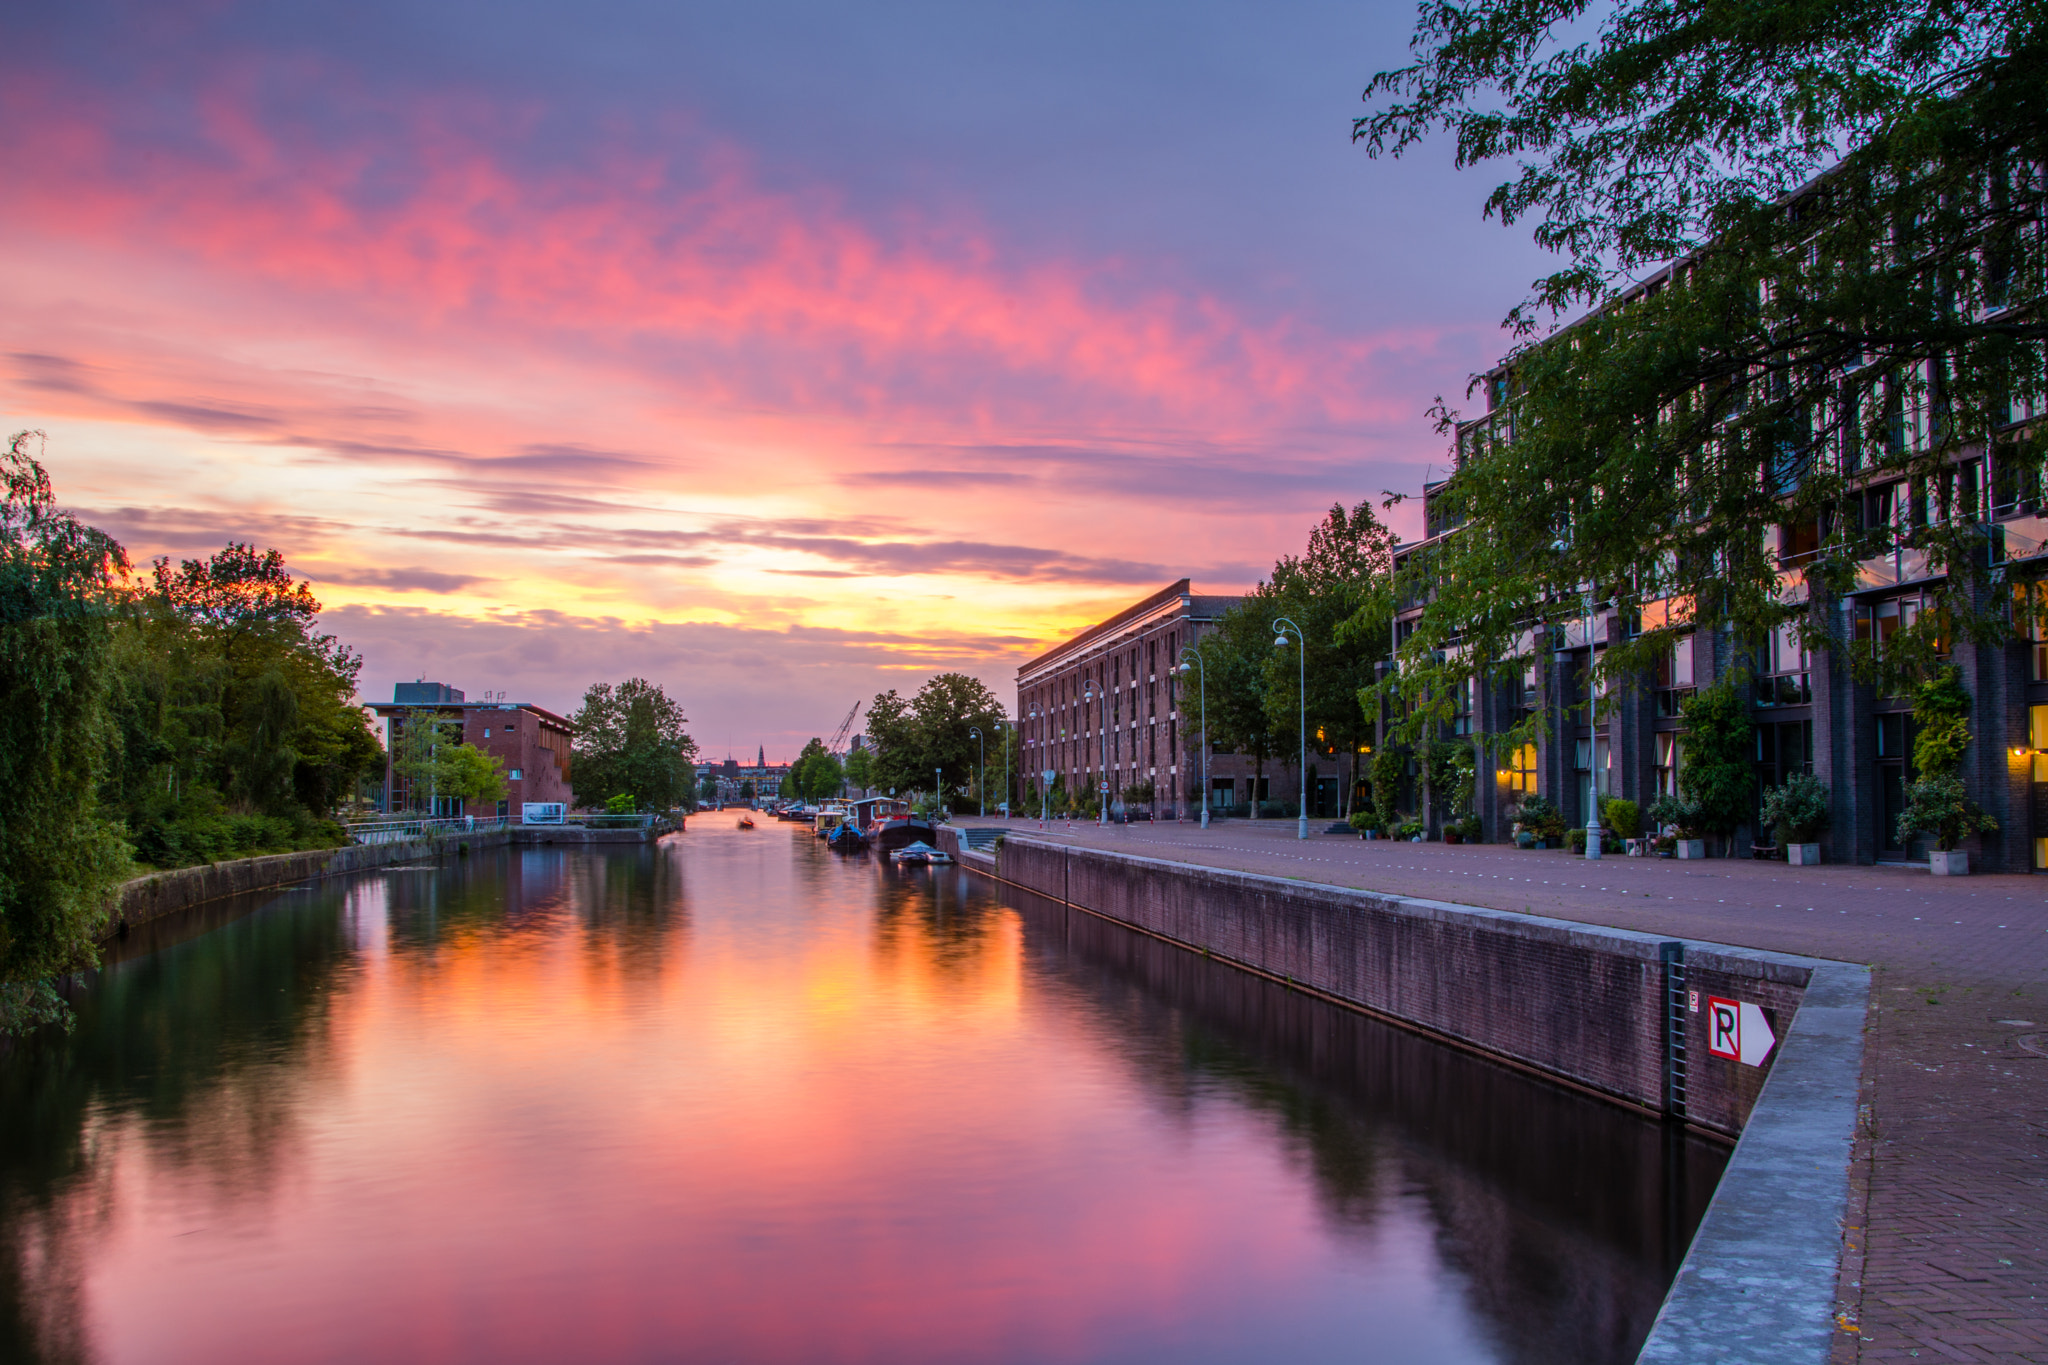 Entrepotdok canal, Amsterdam